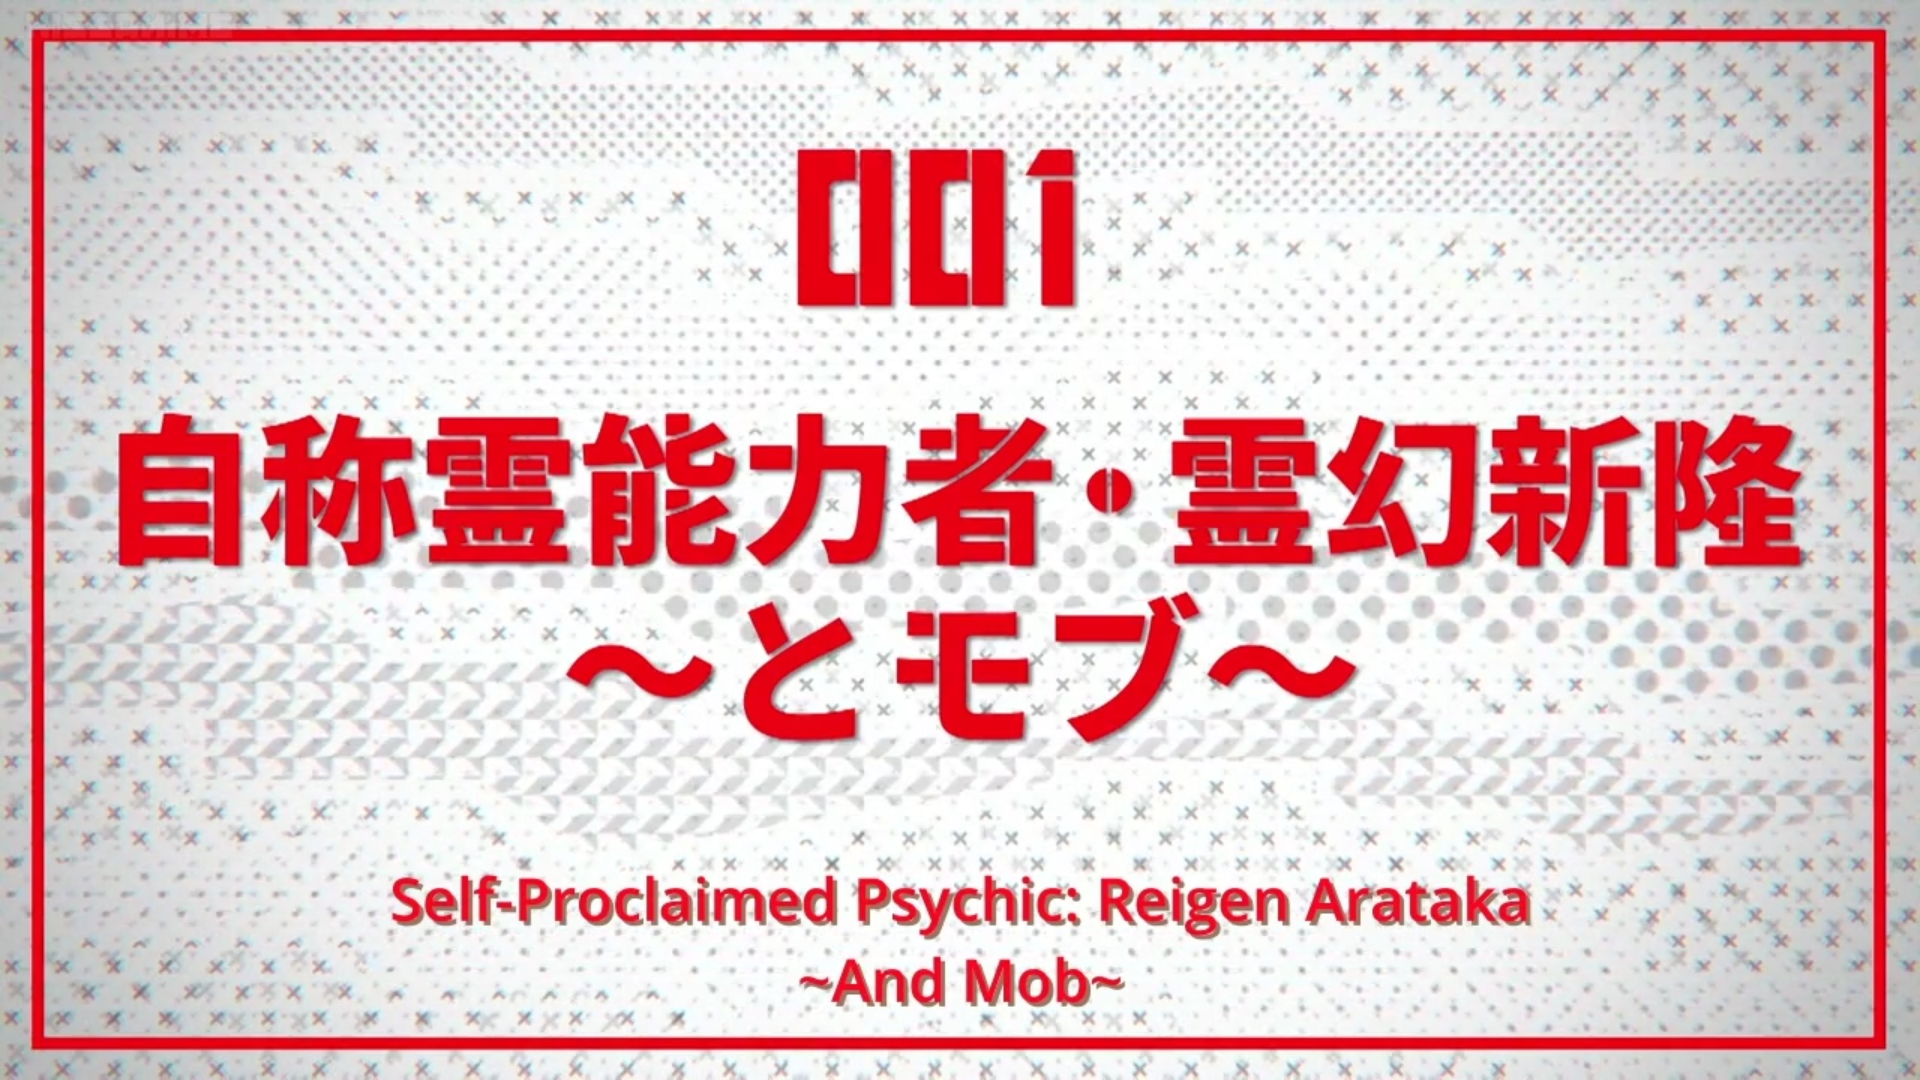 Category:Episodes | Mob Psycho 100 Wiki | FANDOM powered by Wikia